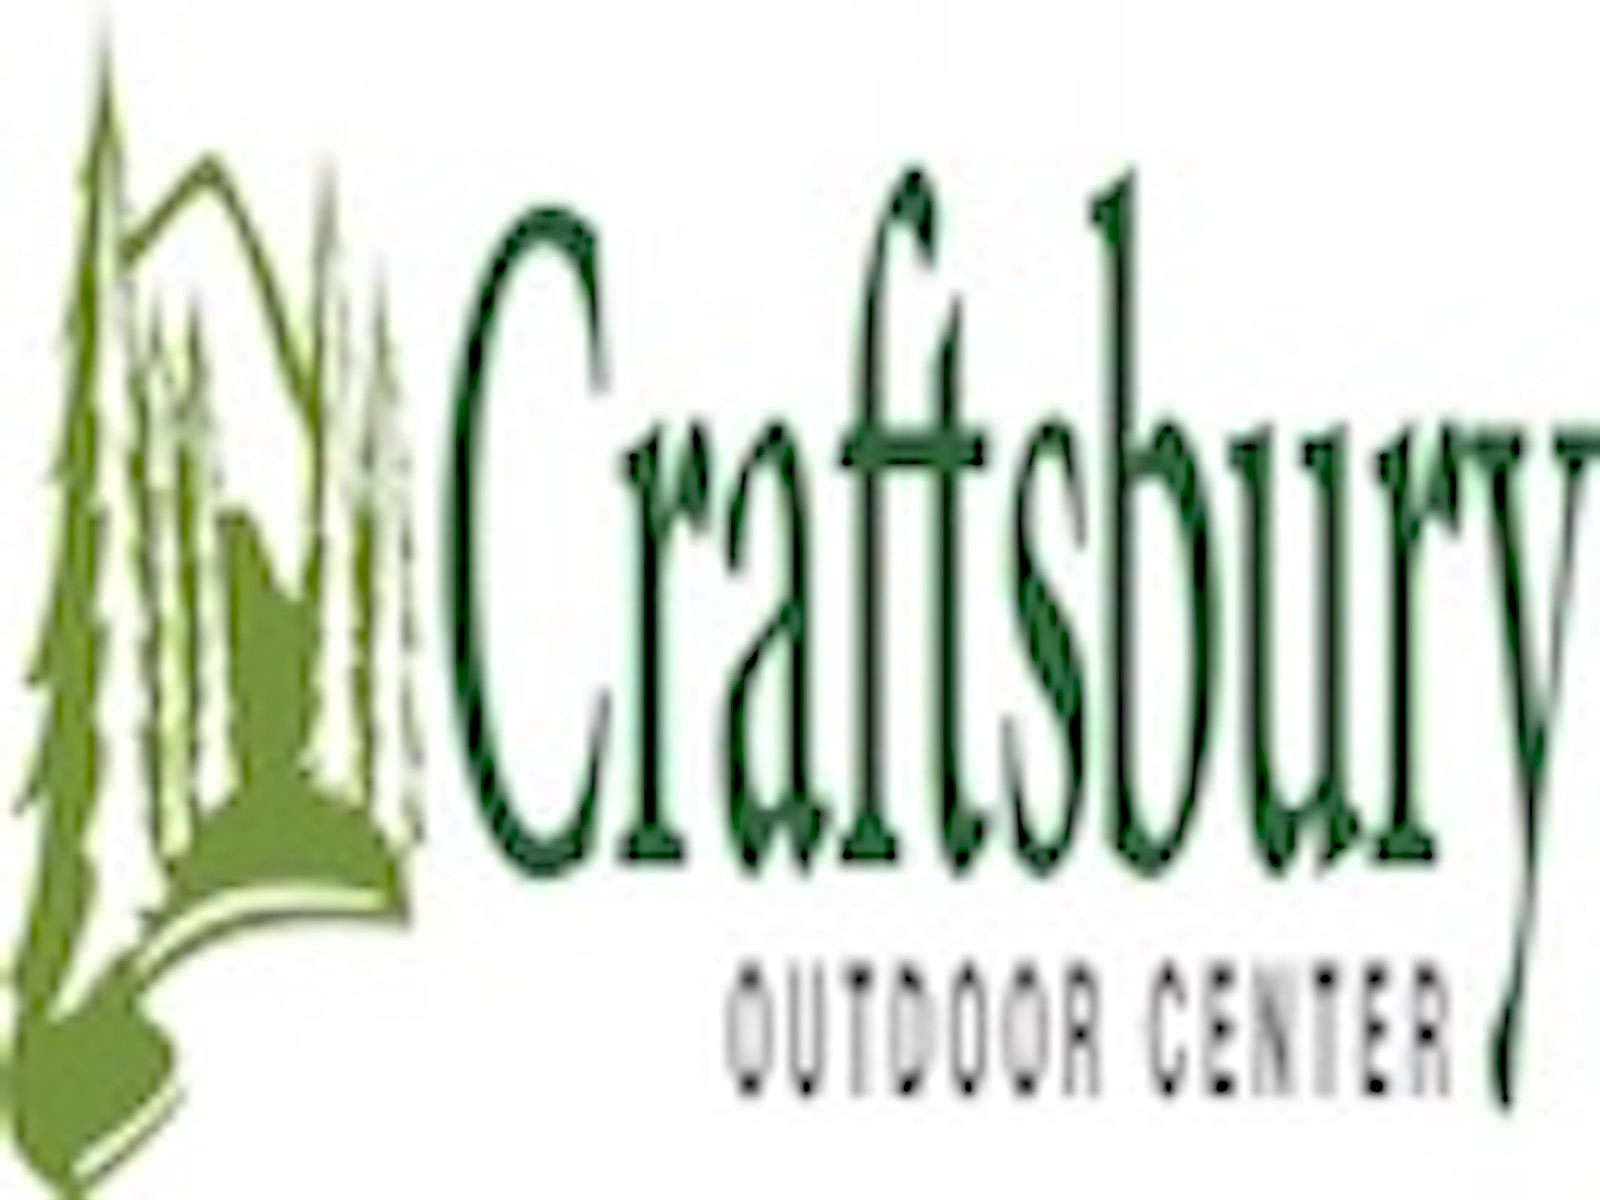 Craftsbury Outdoor Center